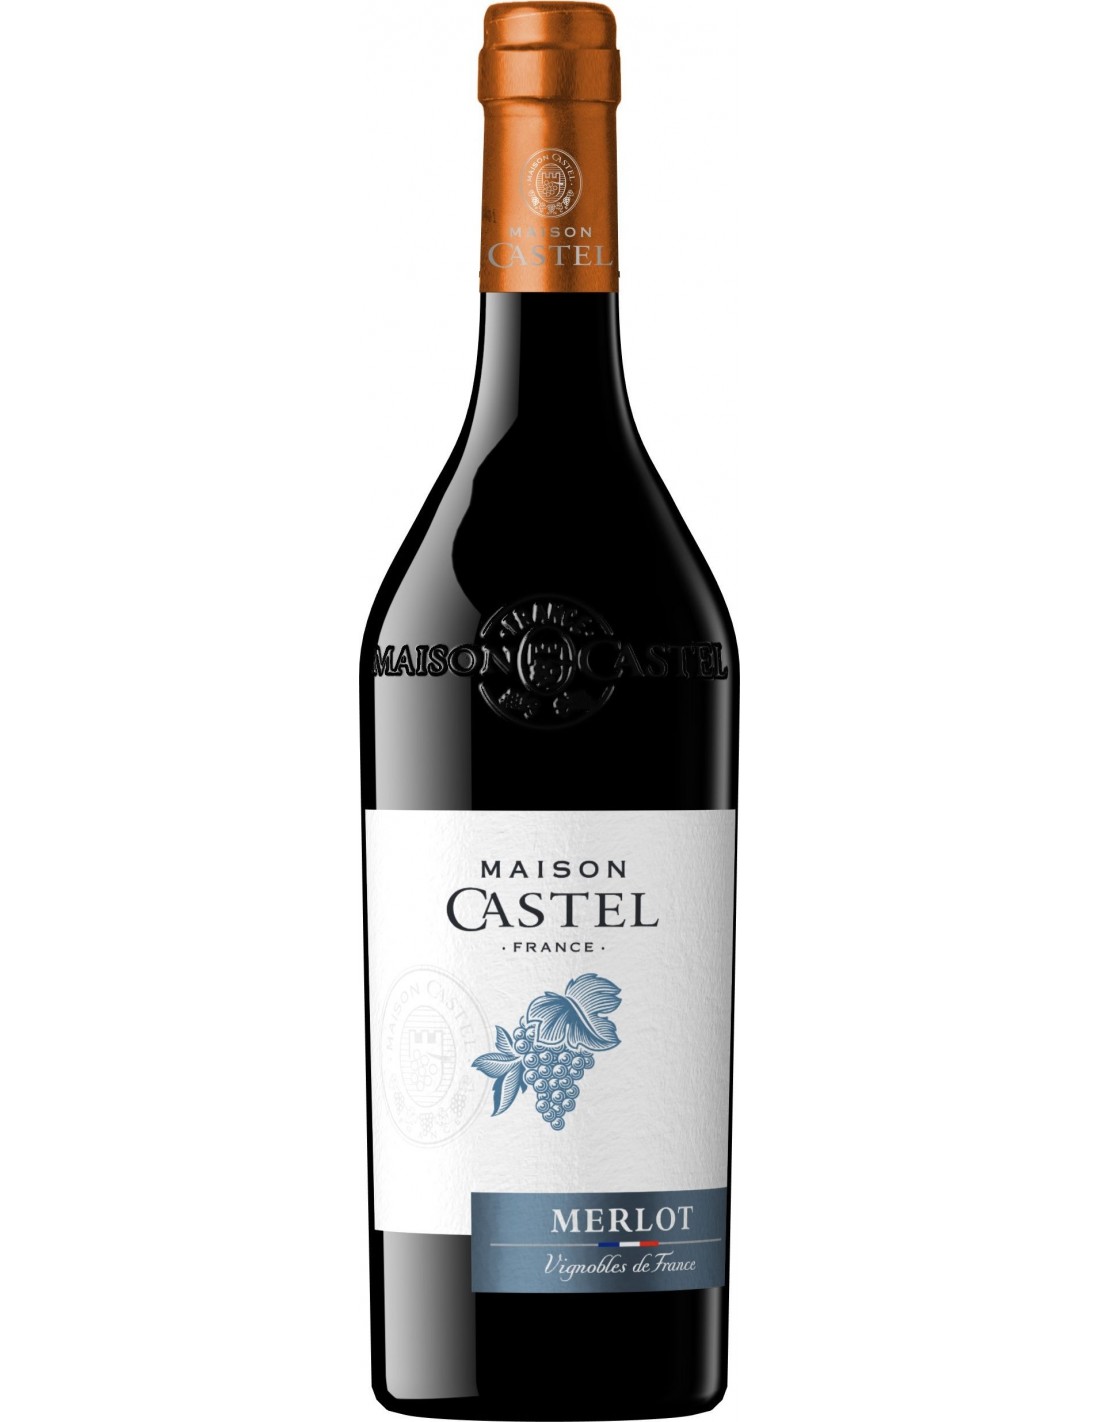 Vin rosu sec, Merlot, Maison Castel Bordeaux Pays d'Oc, 12.5% alc., 0.75L, Franta